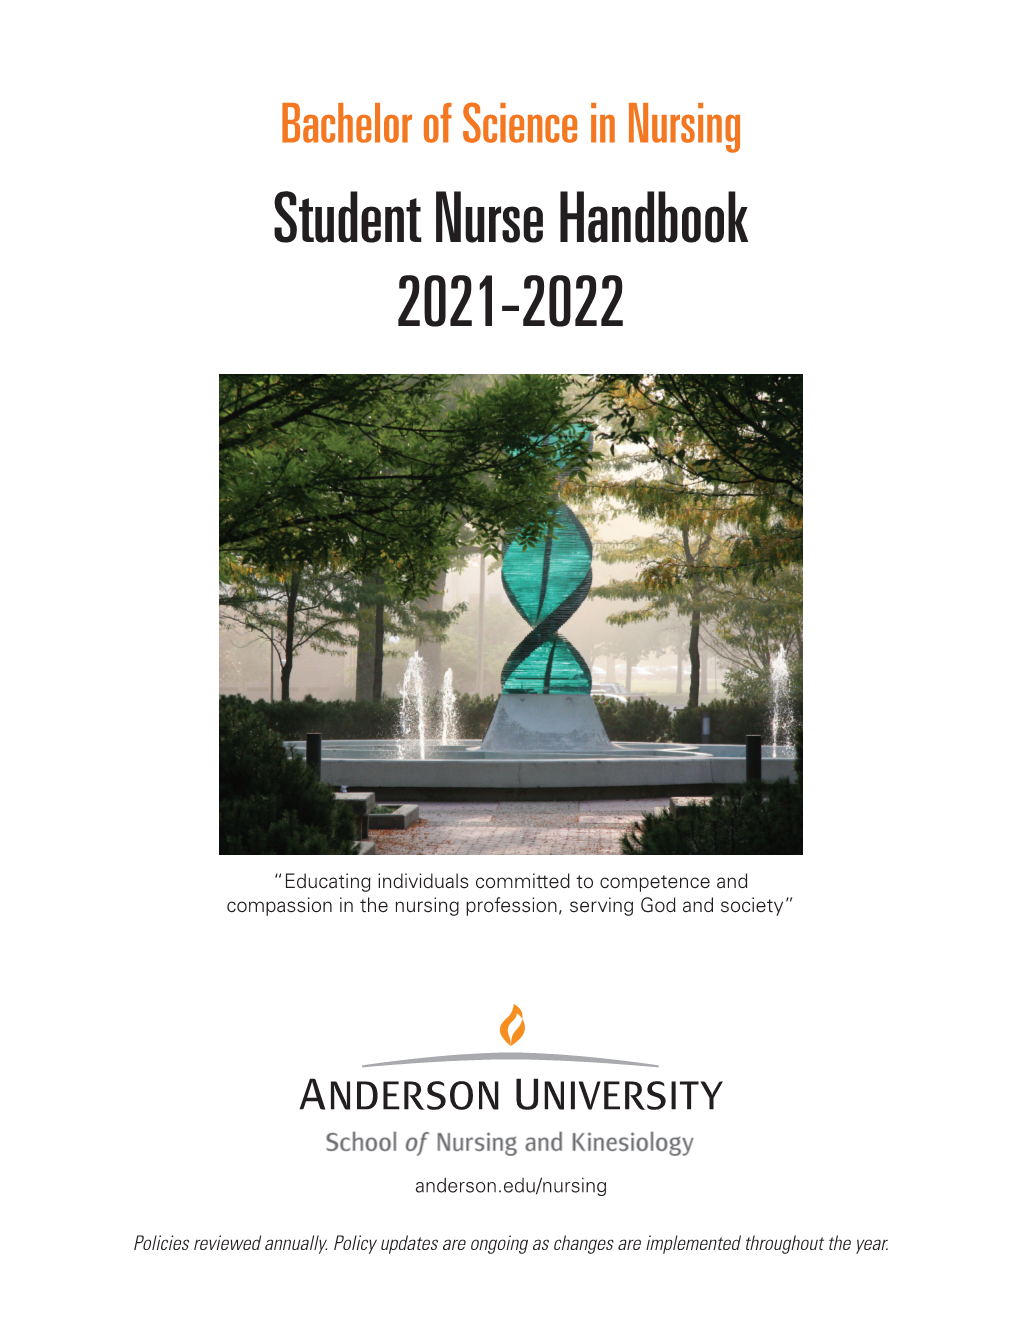 Bachelor of Science in Nursing Student Nurse Handbook 2021-2022